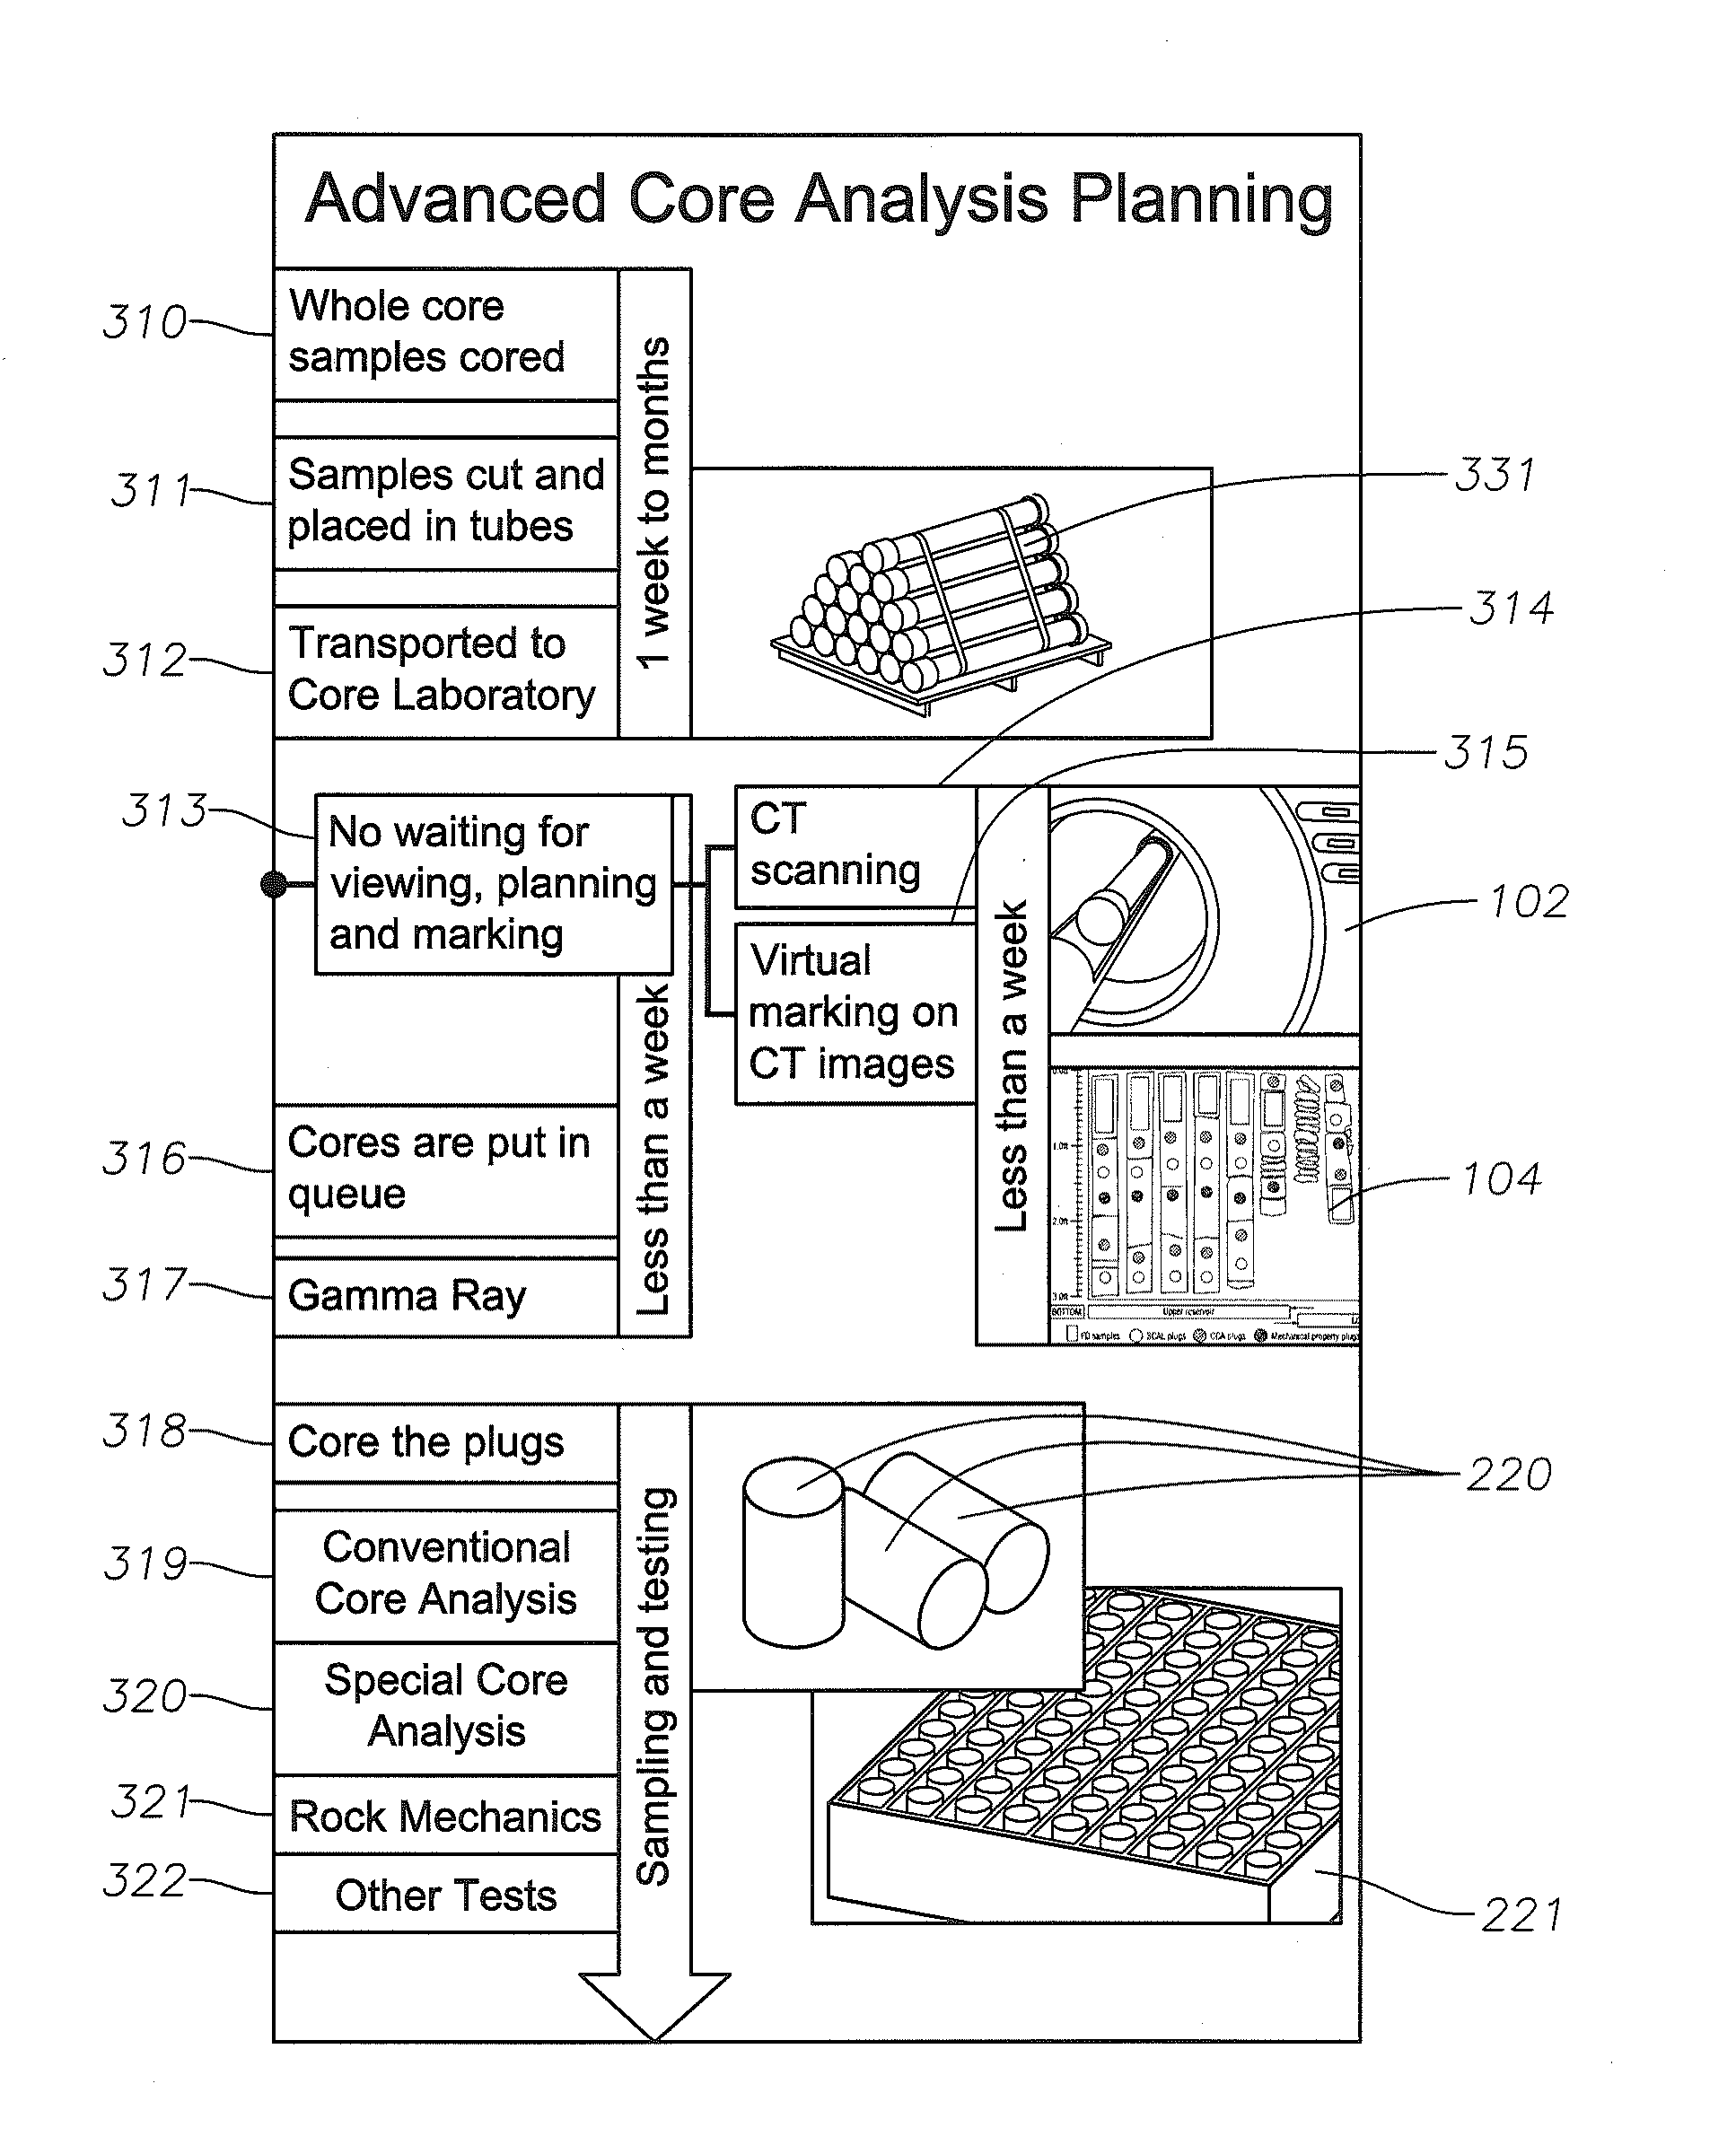 Cored Rock Analysis Planning Through CT Images